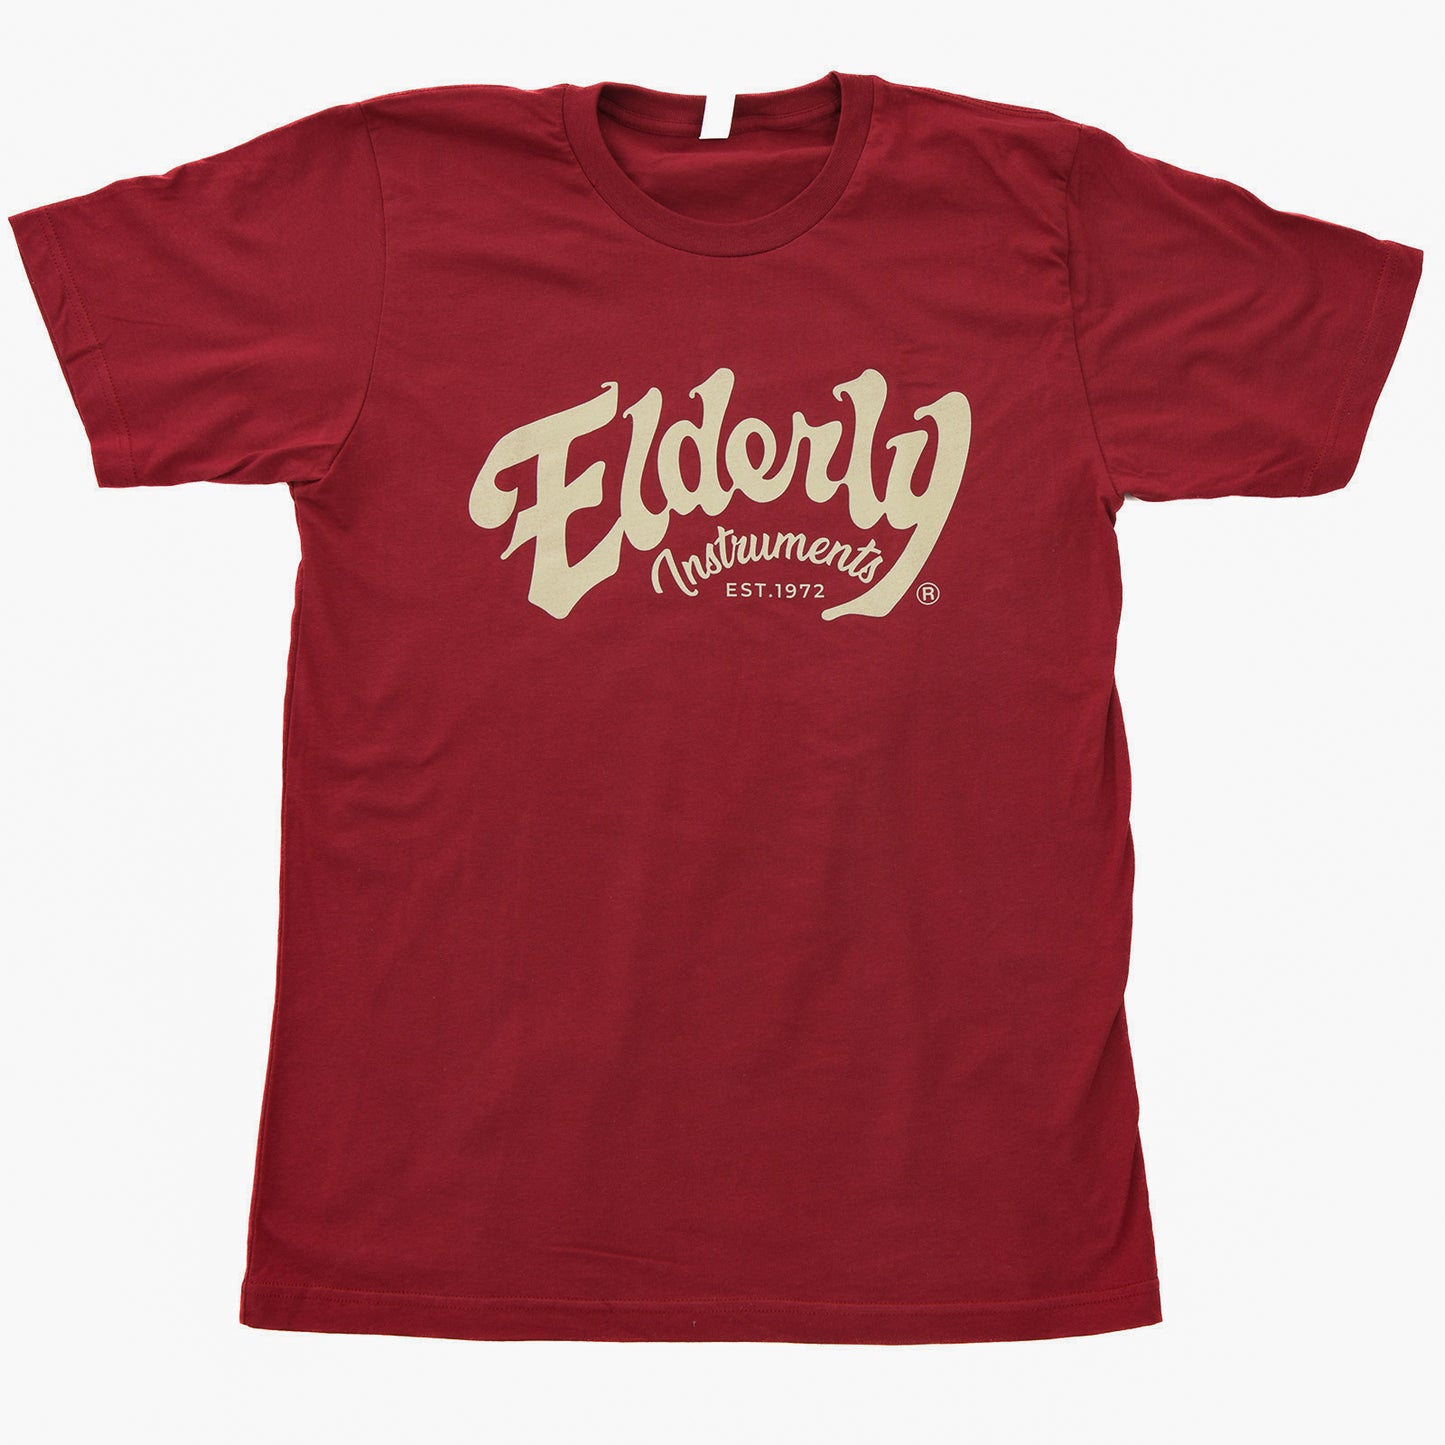 Elderly Instruments 2-Sided Logo-Building Shirt, Cranberry (Various Sizes)